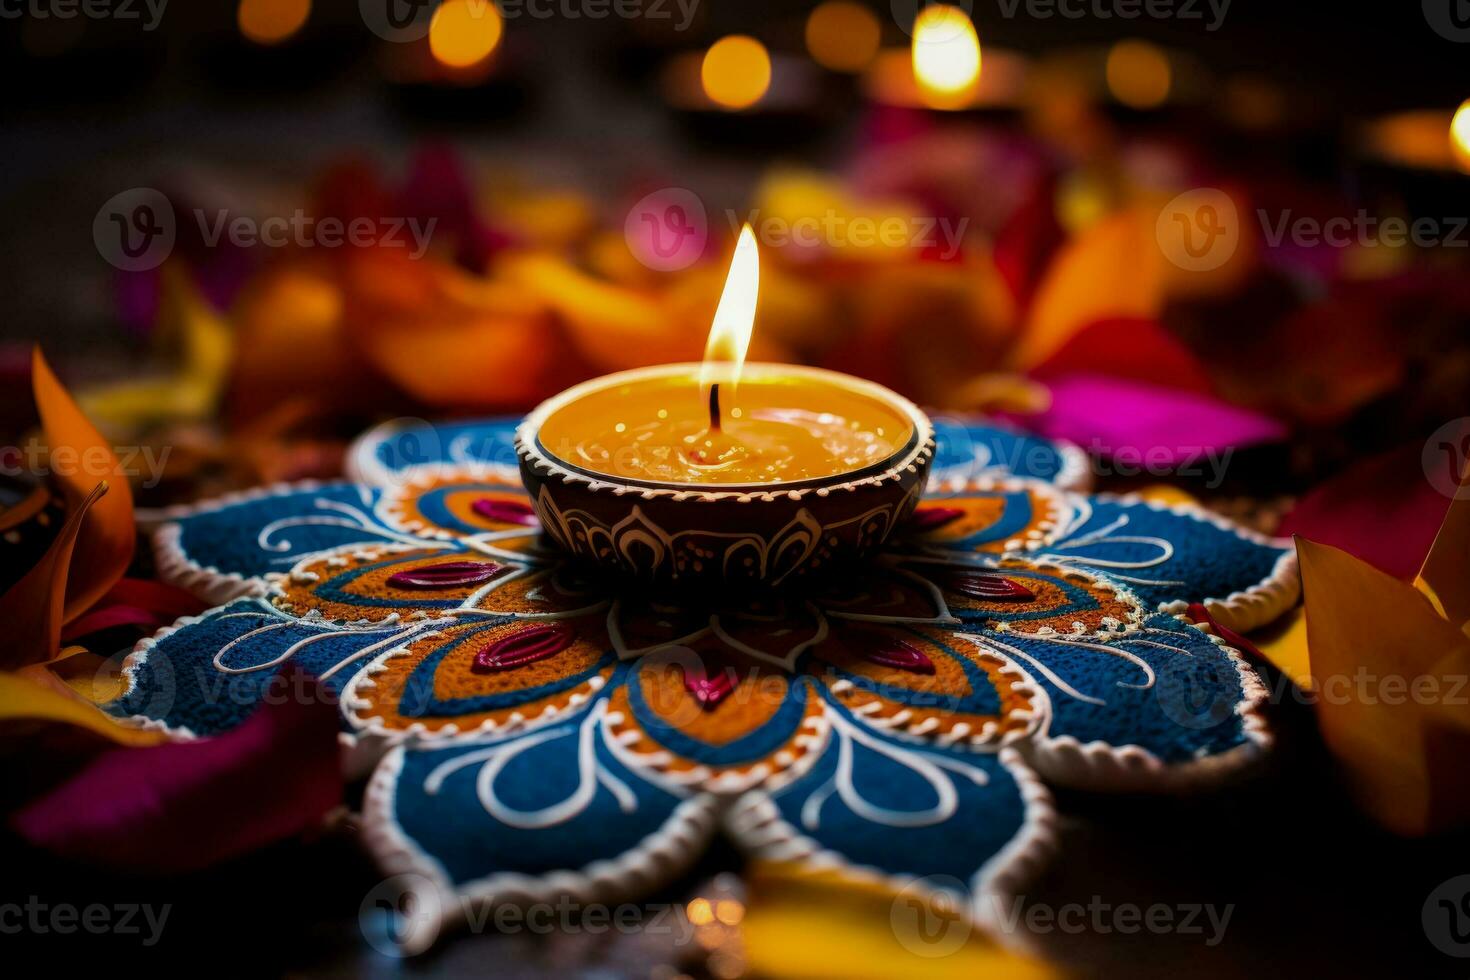 Colorful Rangoli patterns illuminating the spirit of Diwali celebration in vibrant hues photo